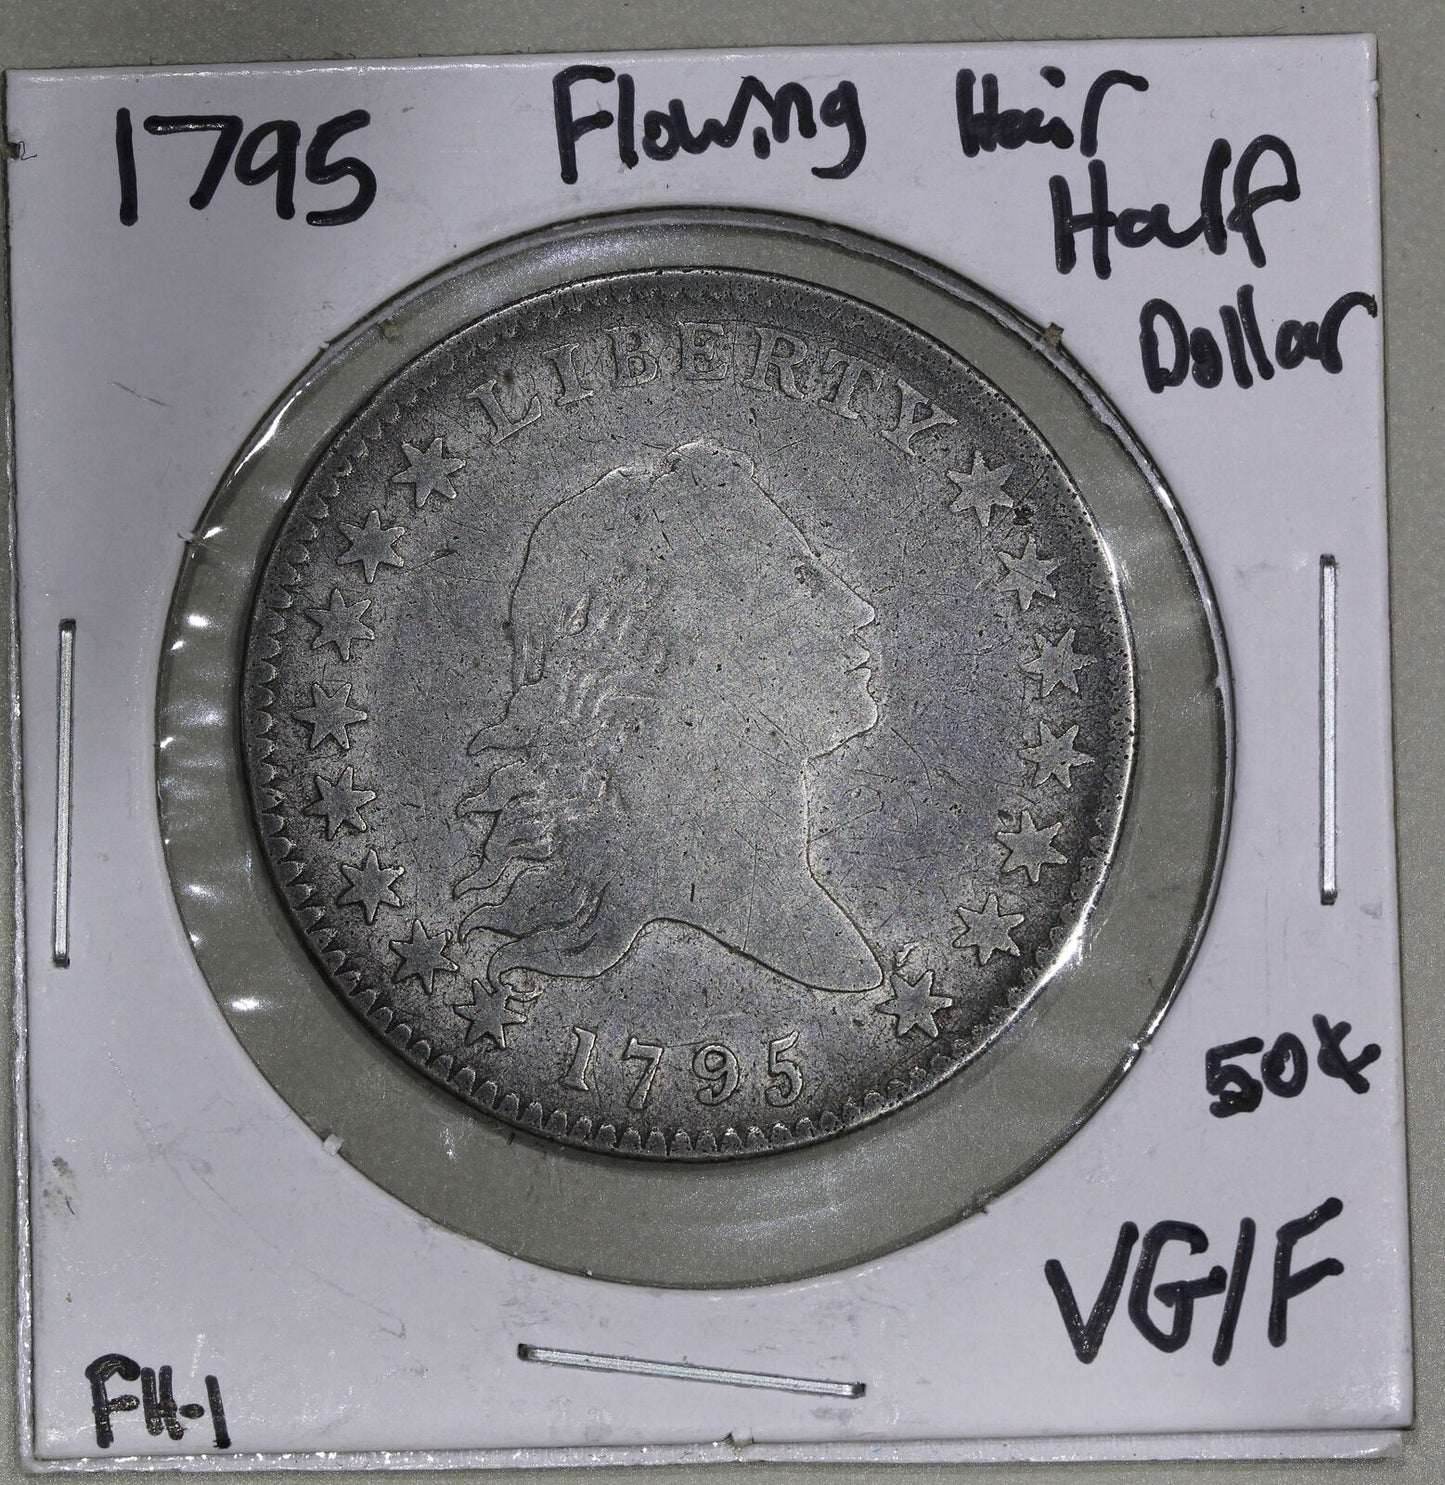 1795 (VG/F) Flowing Hair Half Dollar 50c US Coin Very Good/Fine